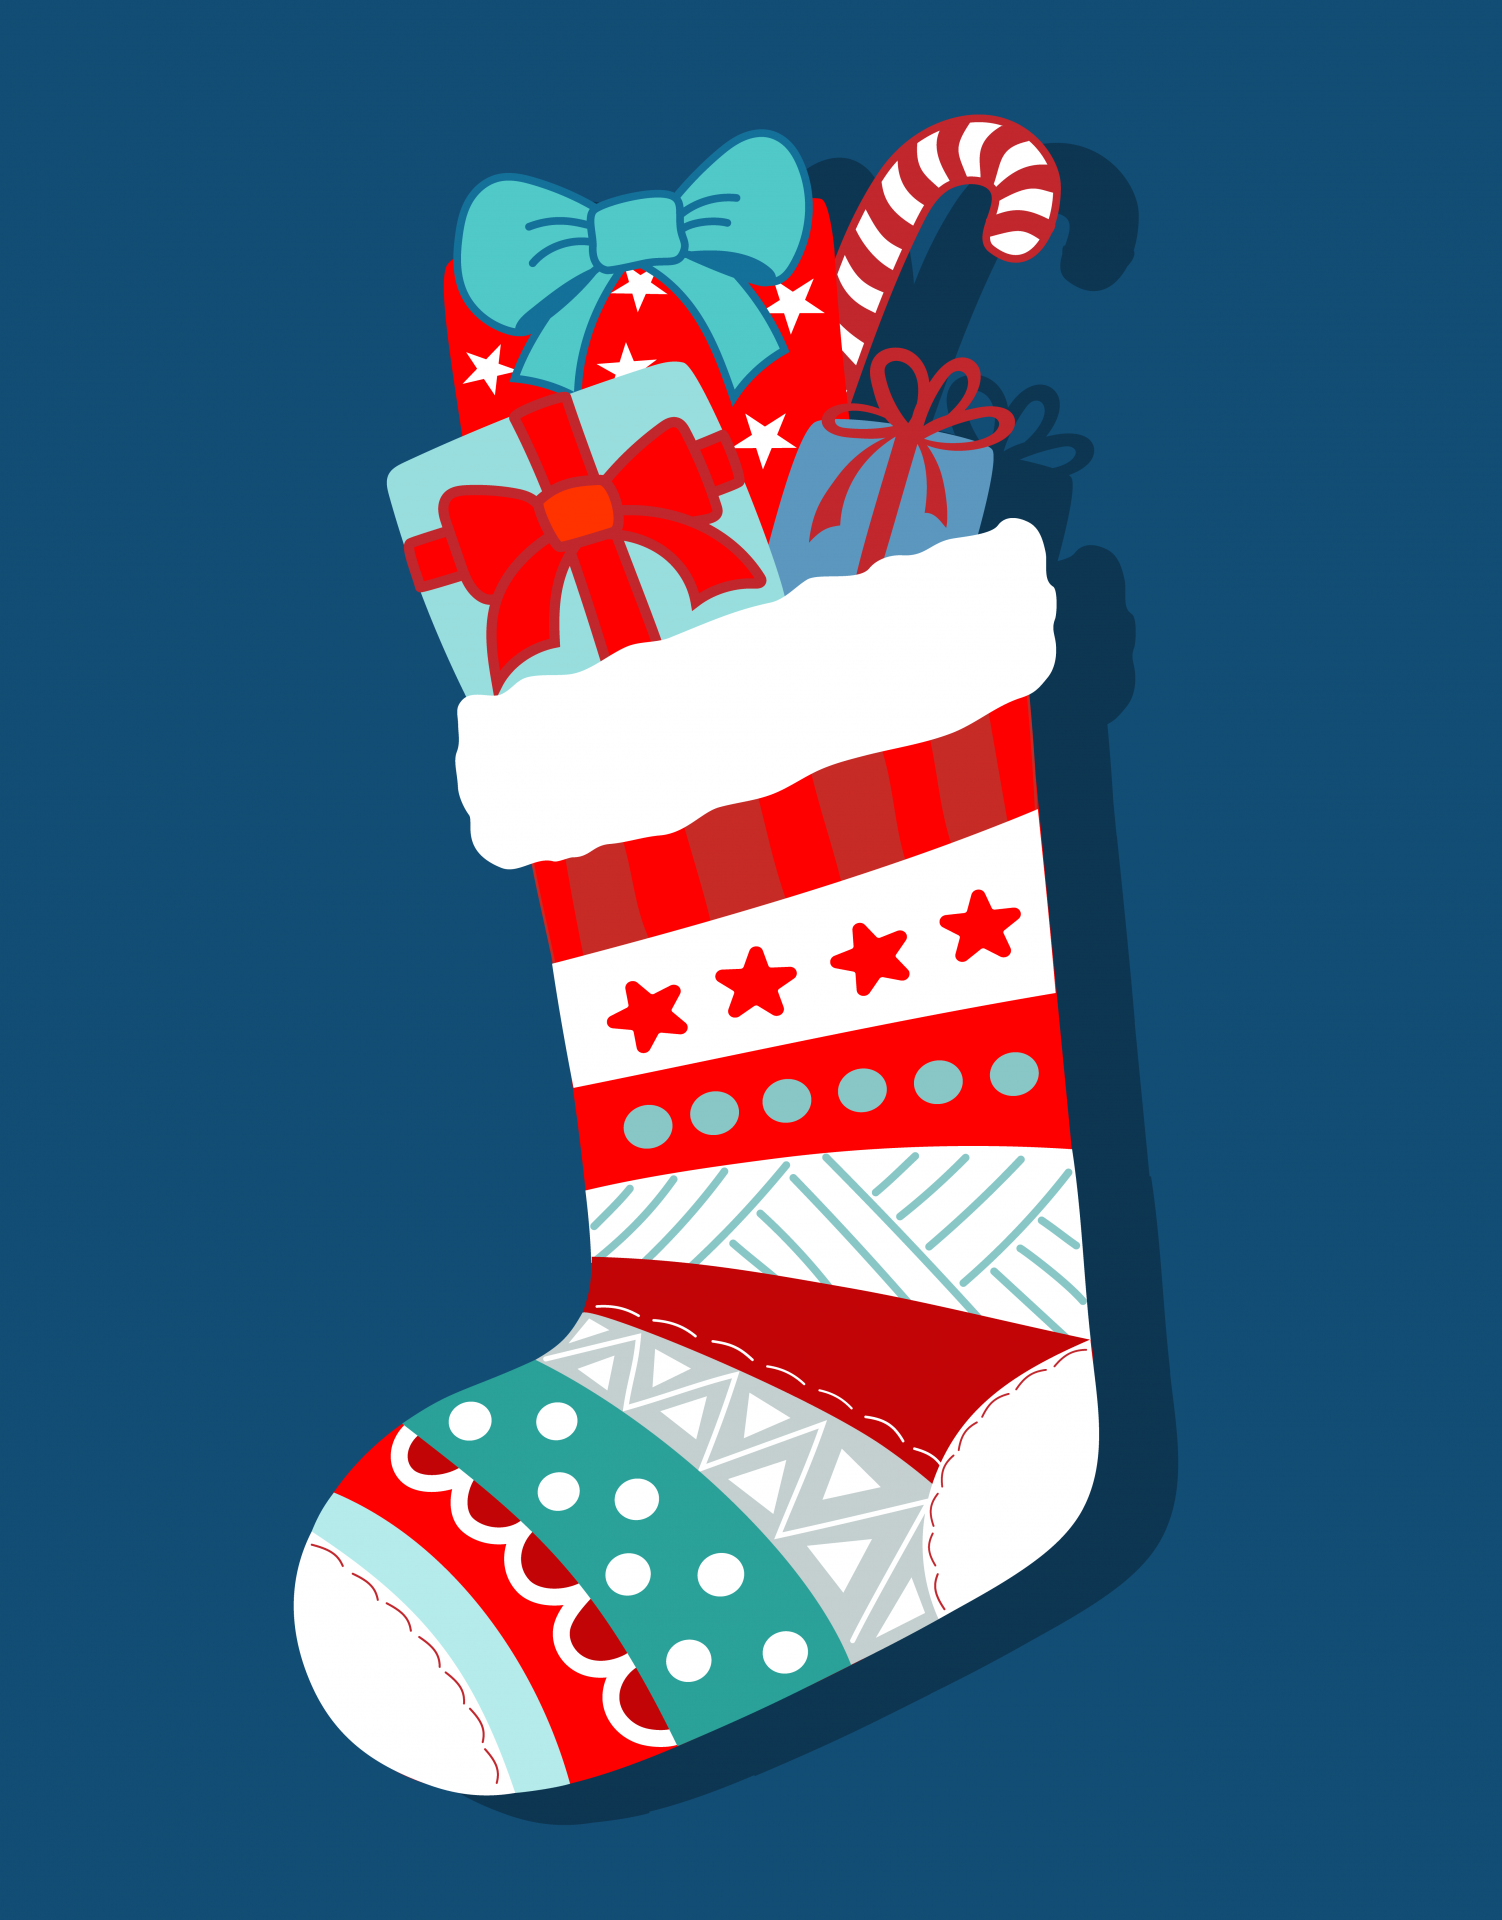 Christmas stocking full of gifts on blue background illustration